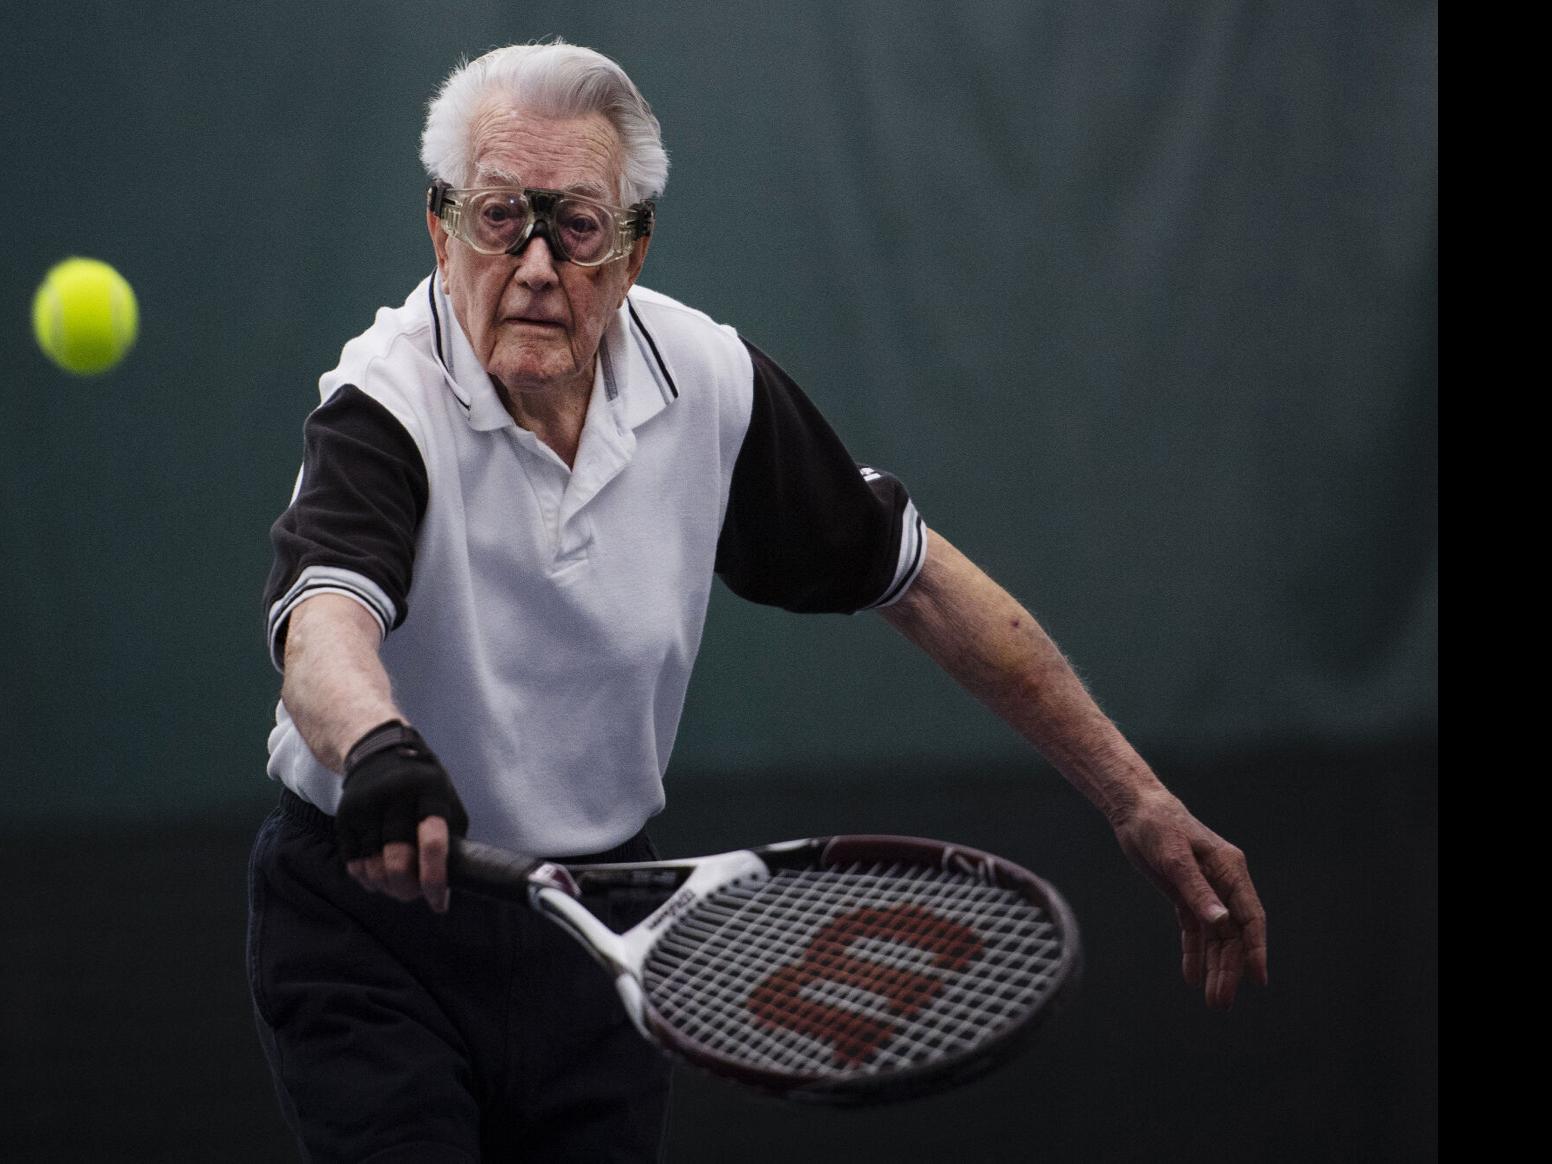 Local man, 90, wins Tennis Super Senior World Championships